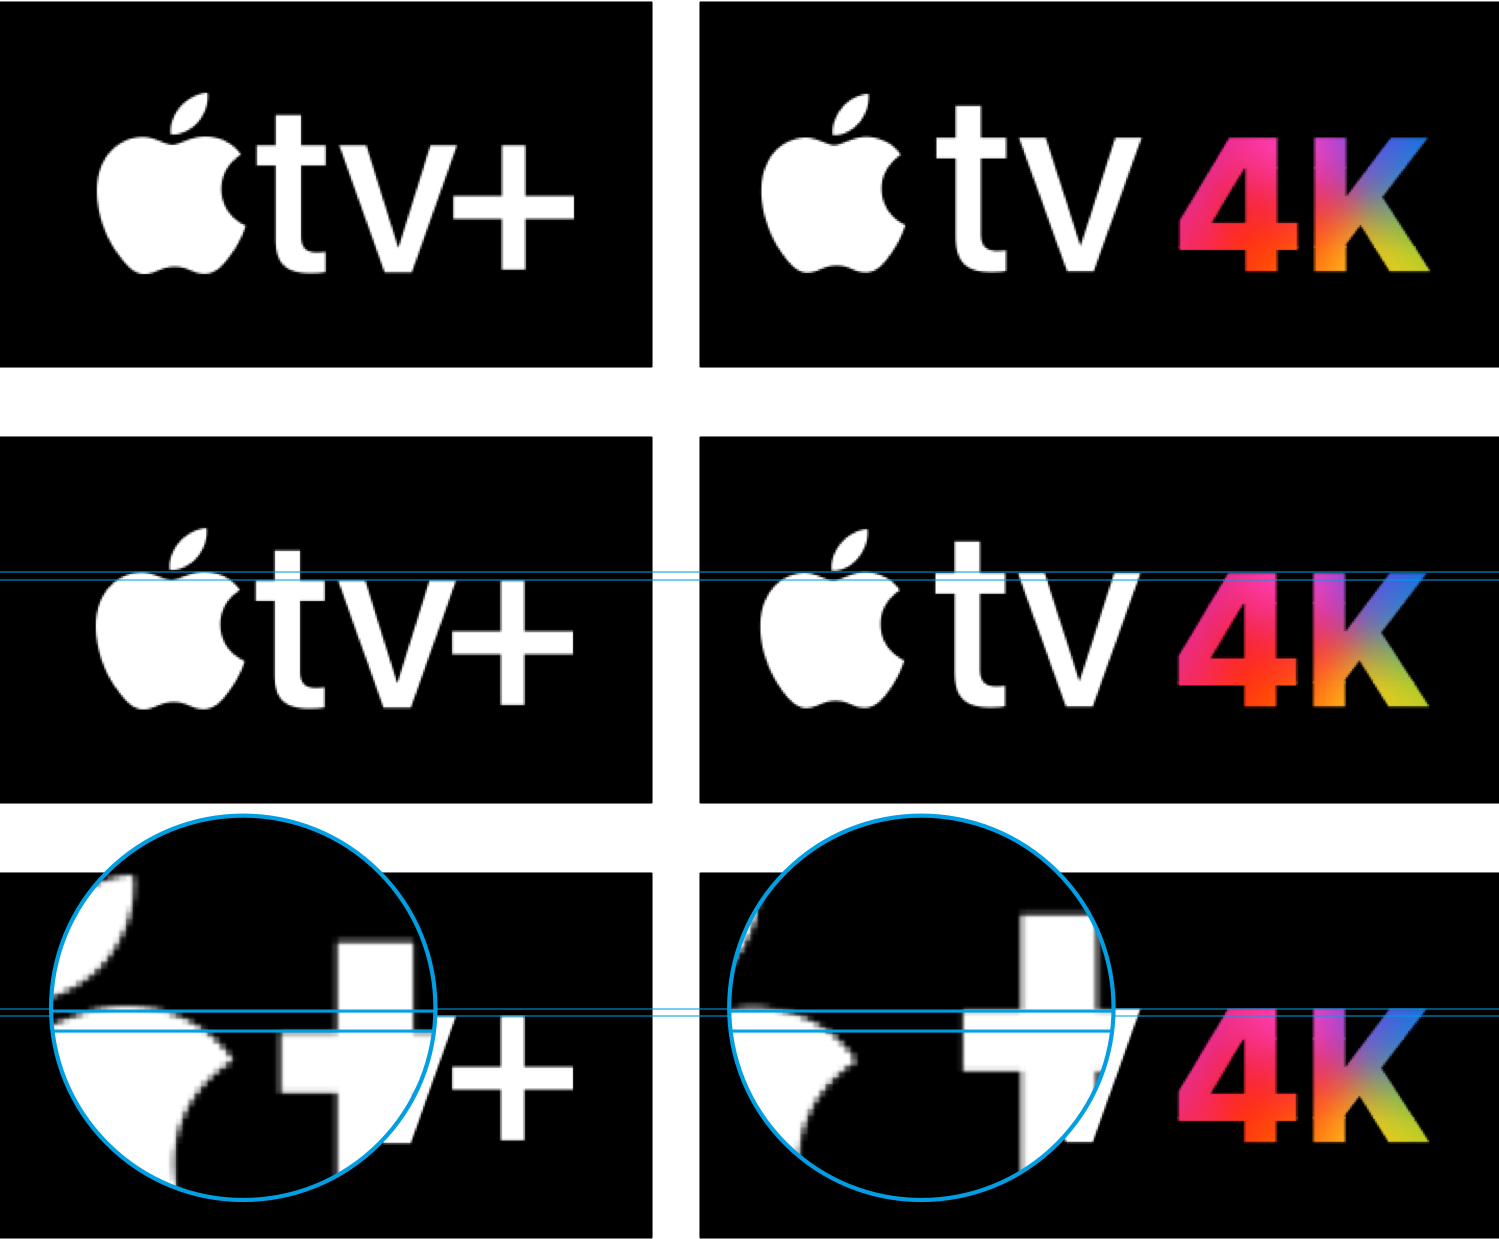 Apple's Apple TV+ and Apple TV 4K wordmarks.